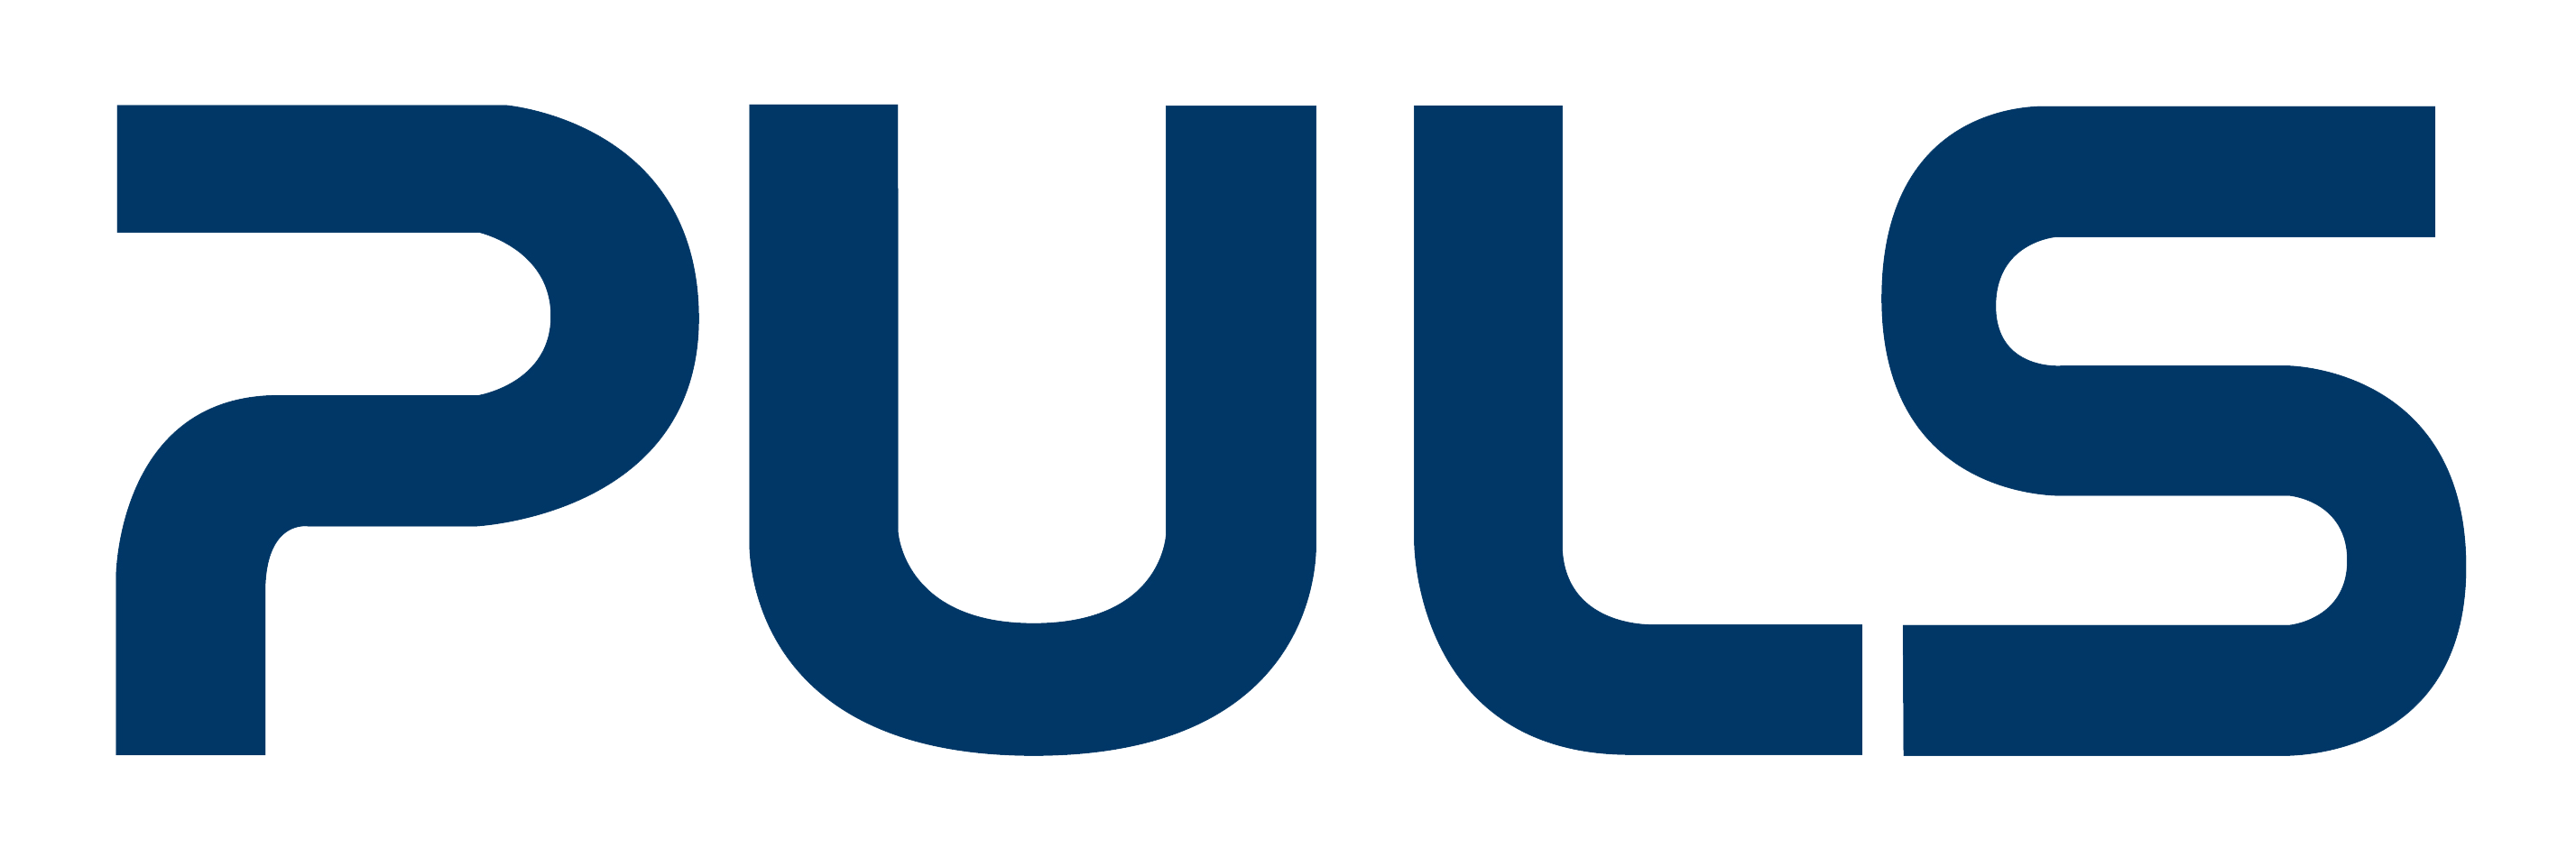 PULS-logo